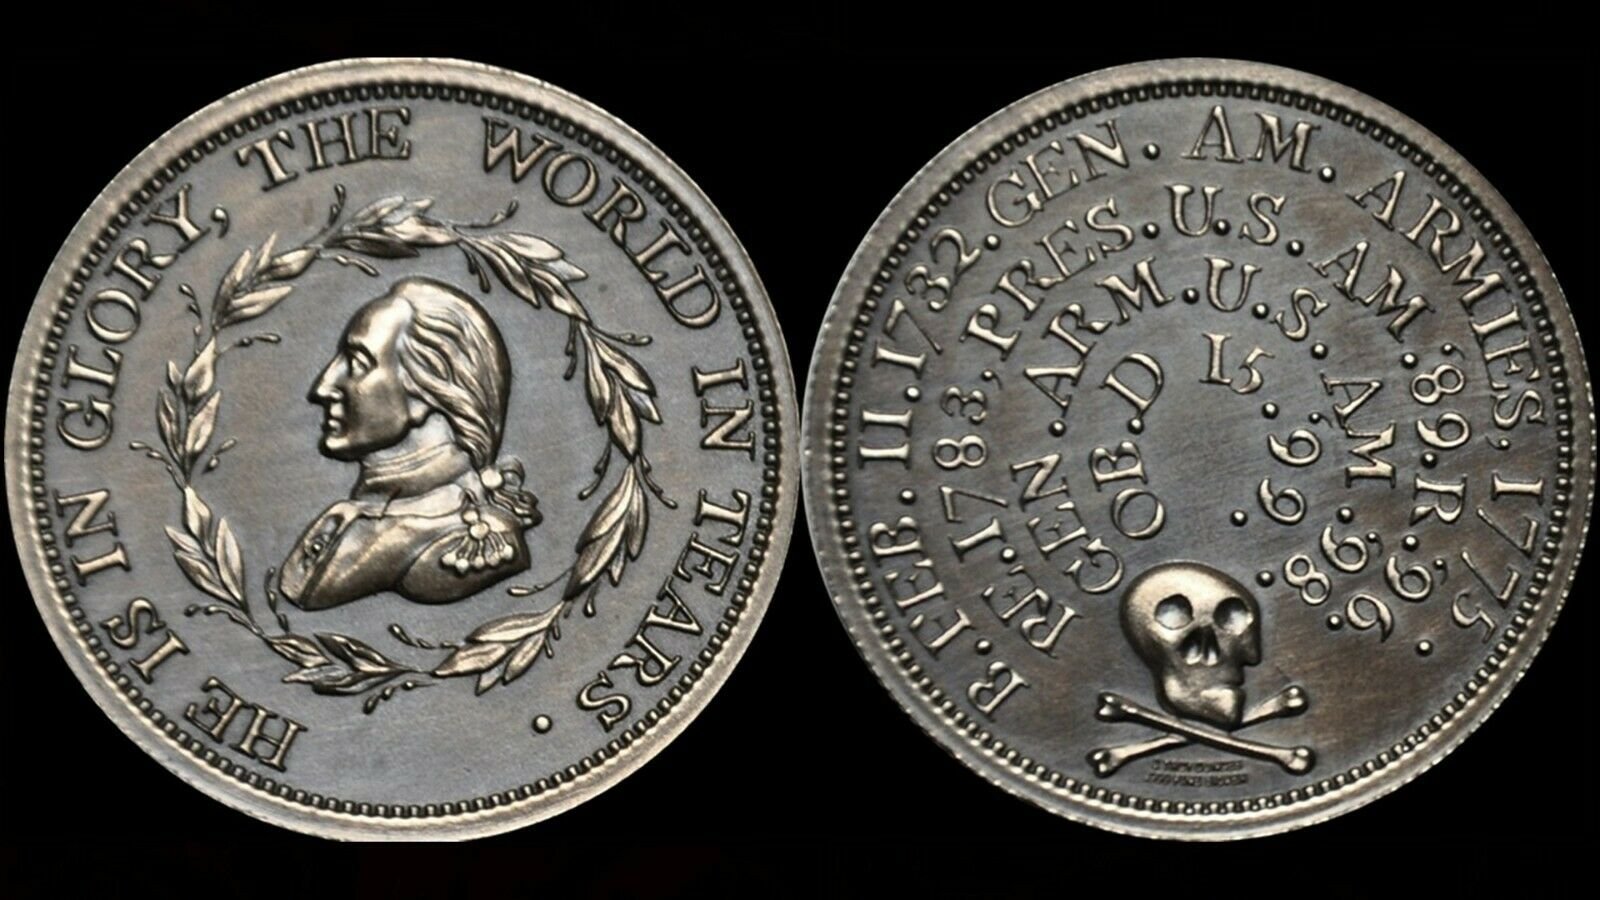 George Washington Funeral Medal 2 oz Silver Antiqued Round.. (1).jpg